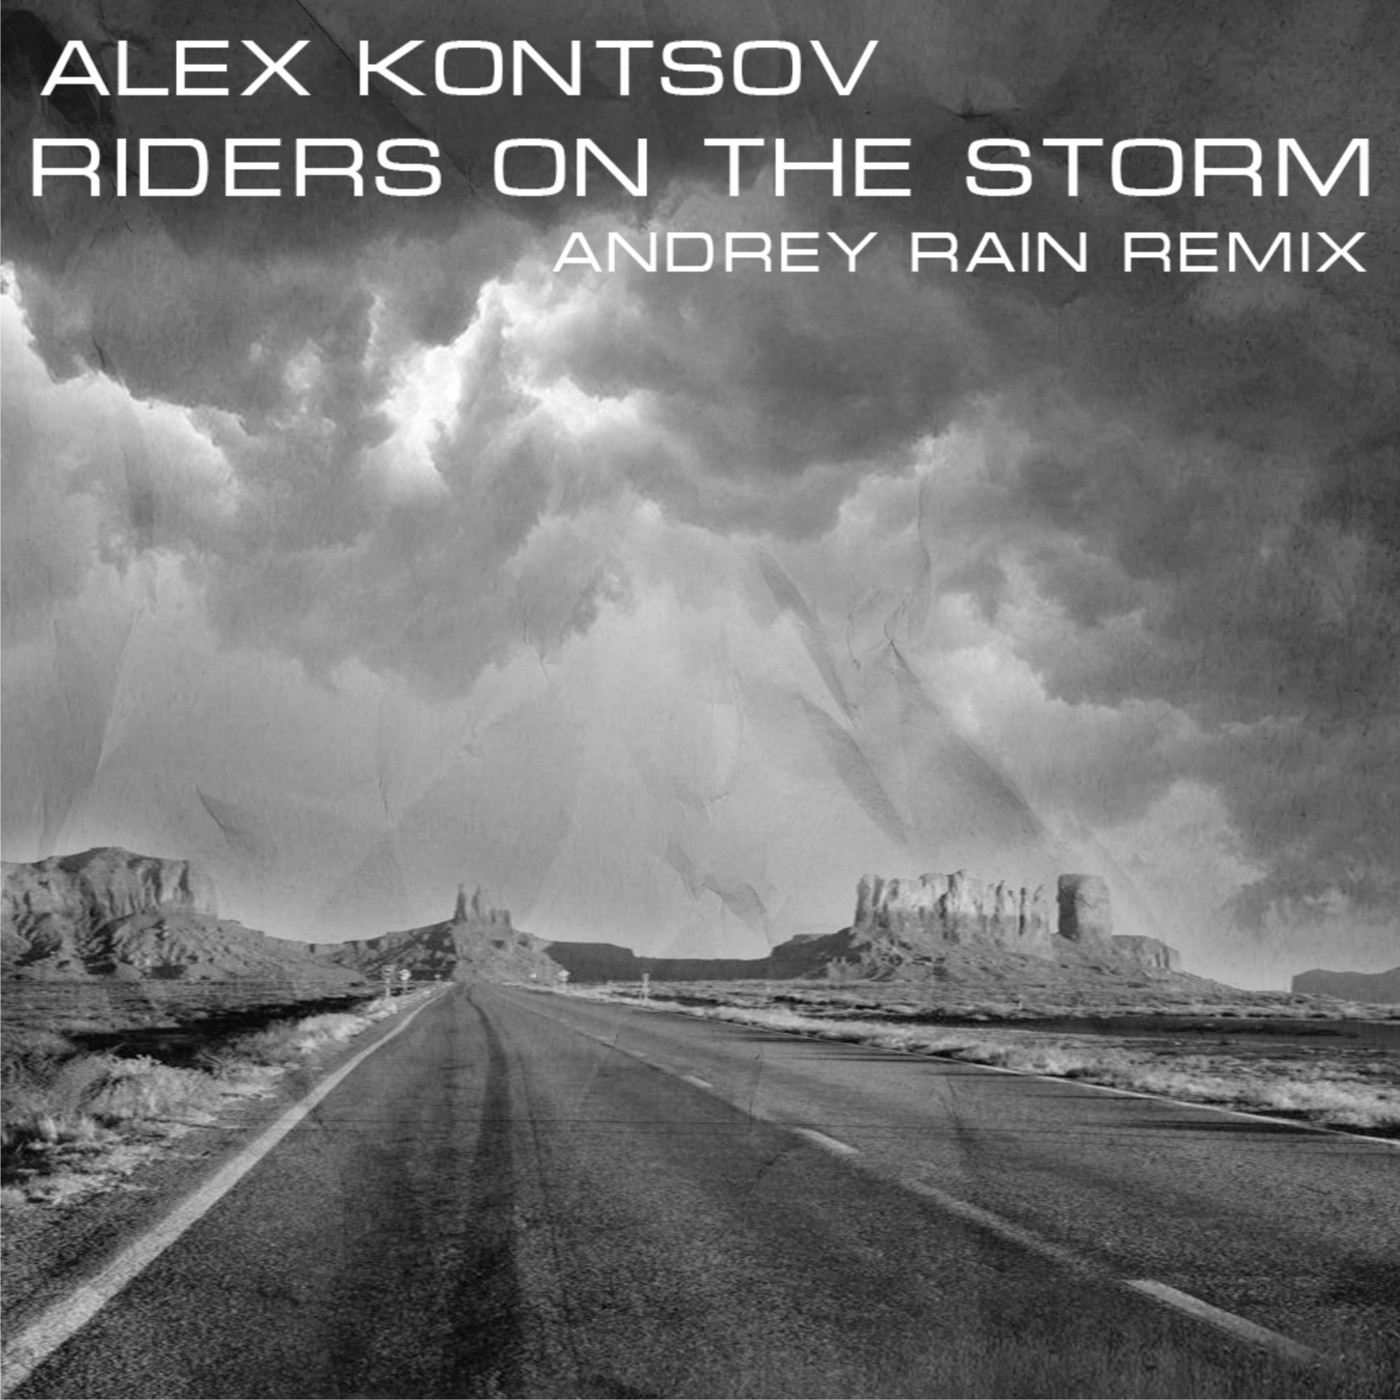 Rain ремикс. Riders on the Storm. The Rain Remix. Alex kontsov Riders on the Storm FUZZDEAD Remix. Alex kontsov - Red Dust (feat. Isentie) альбом.